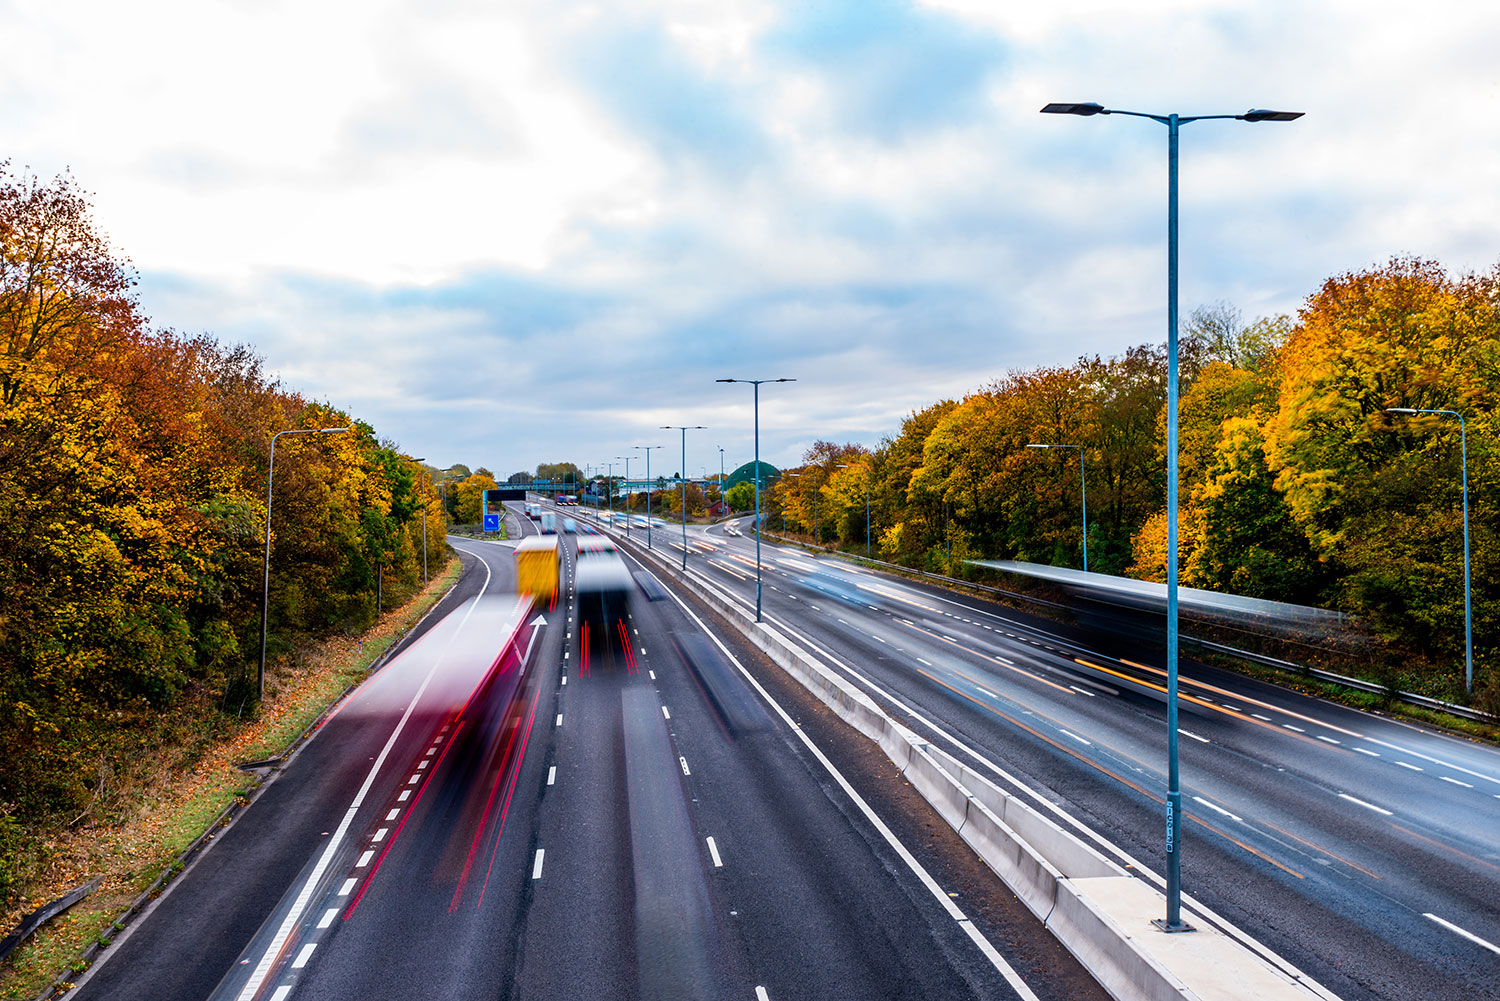 Could secret road sensor checks signal the end for vehicle overloading?